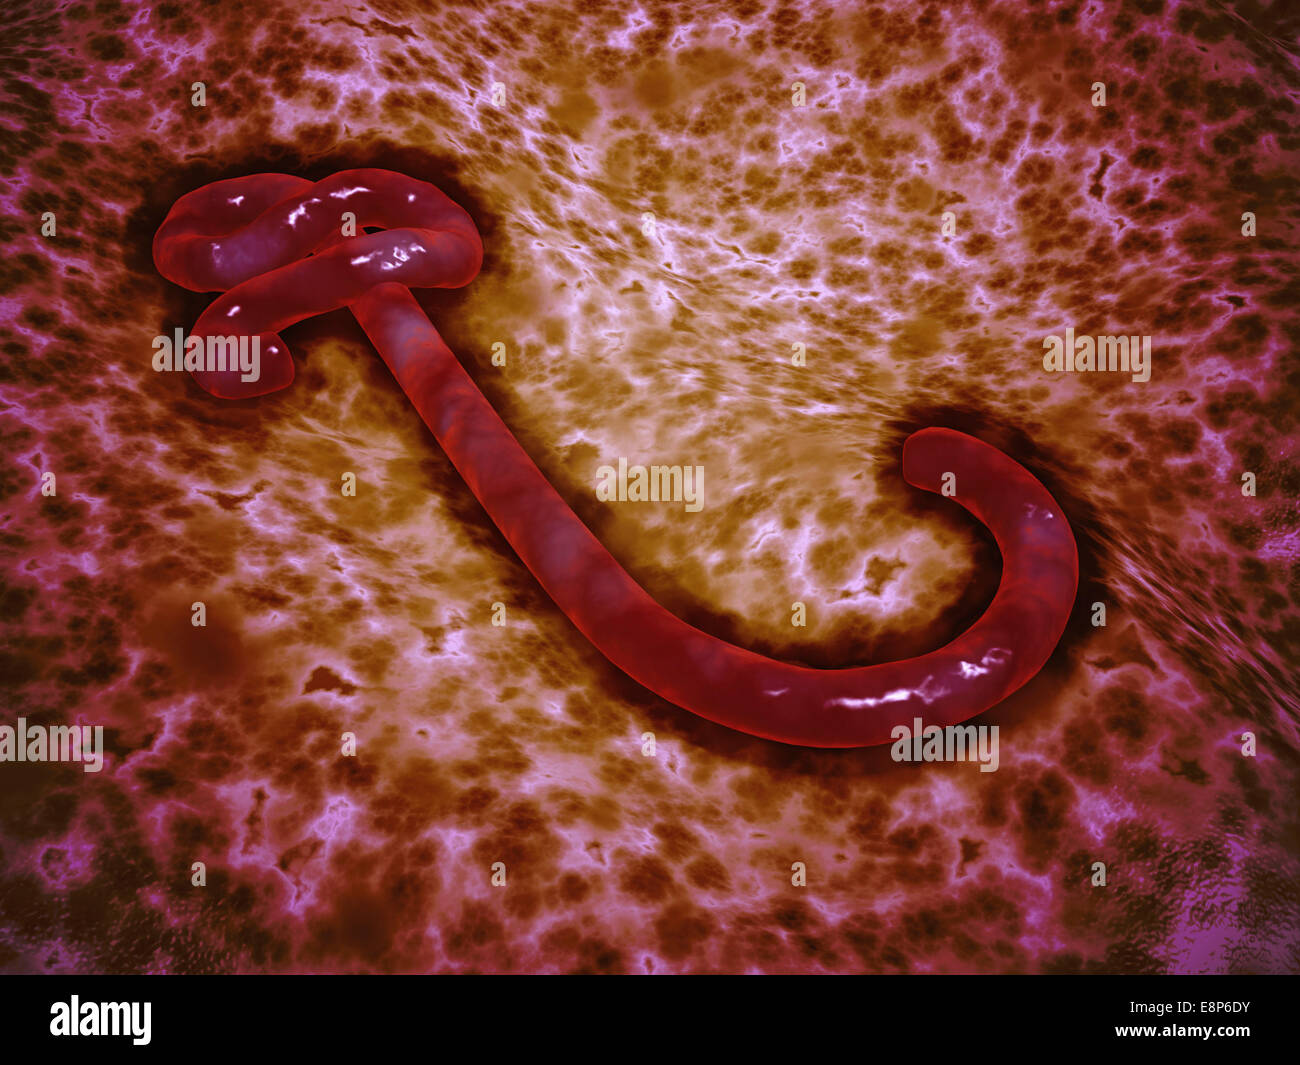 Microscopic view of ebola virus. Stock Photo